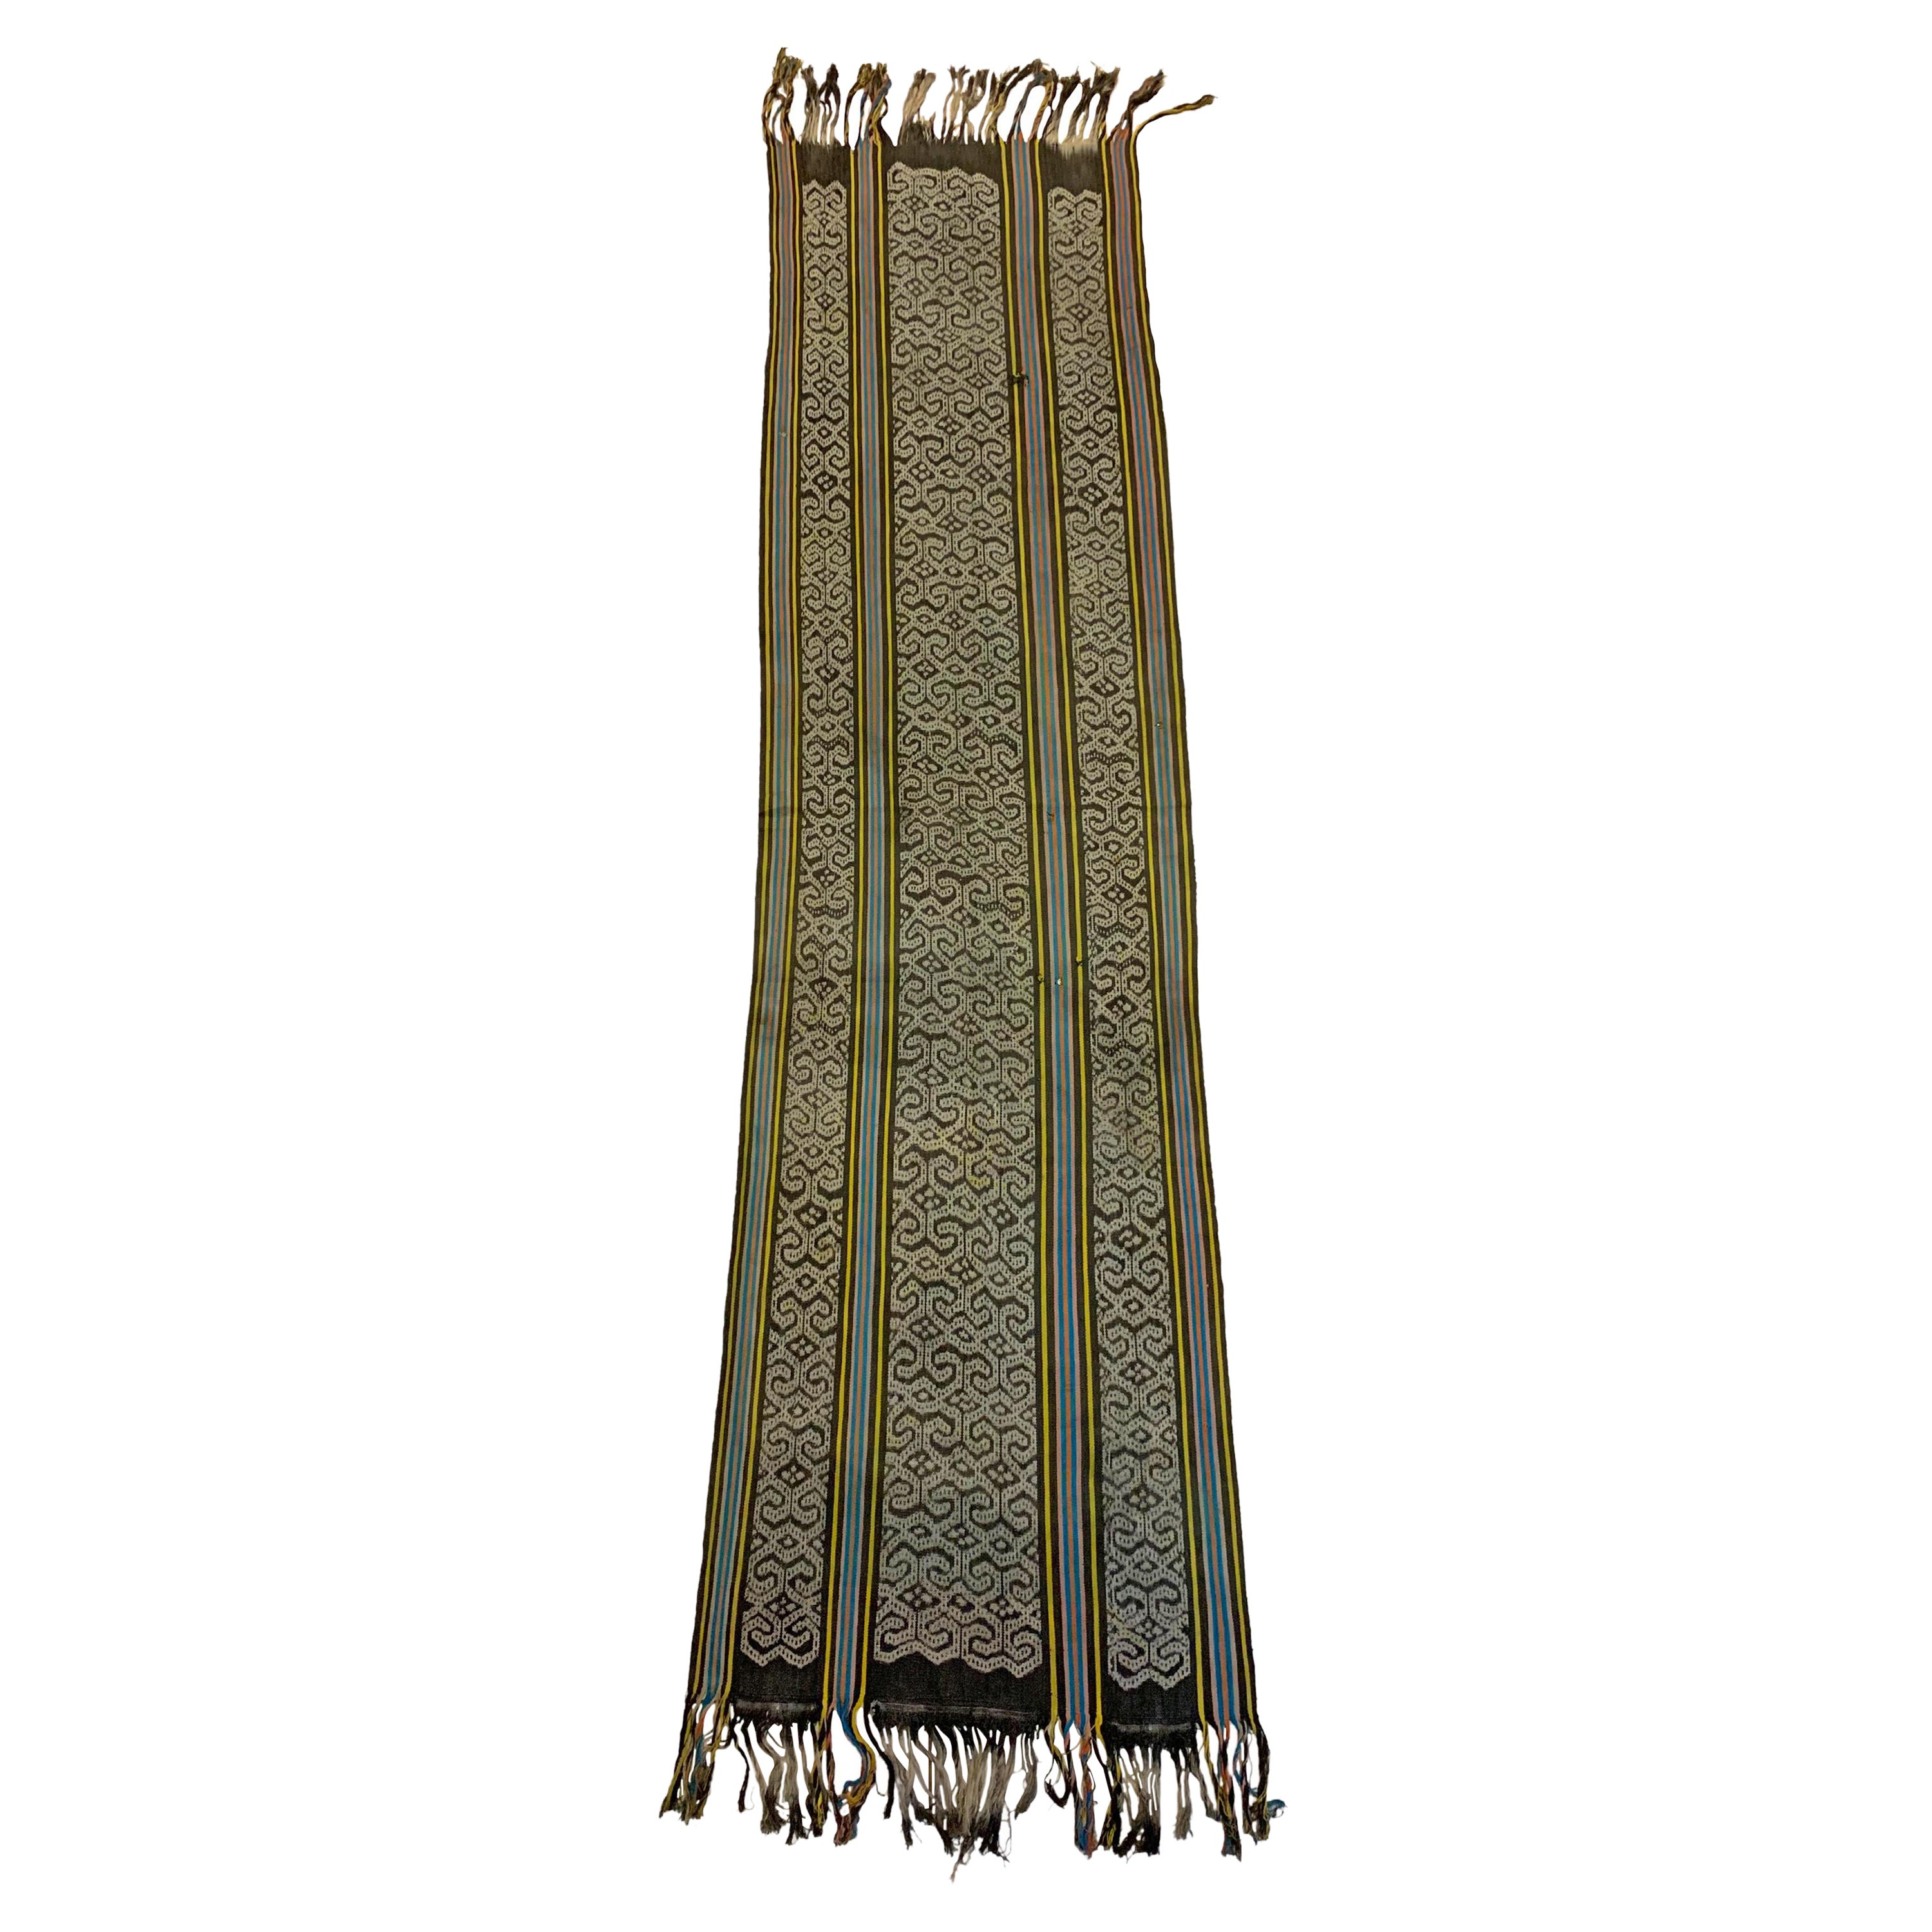 Long ikat Textile from Sumba Island Tribal Motifs, Indonesia